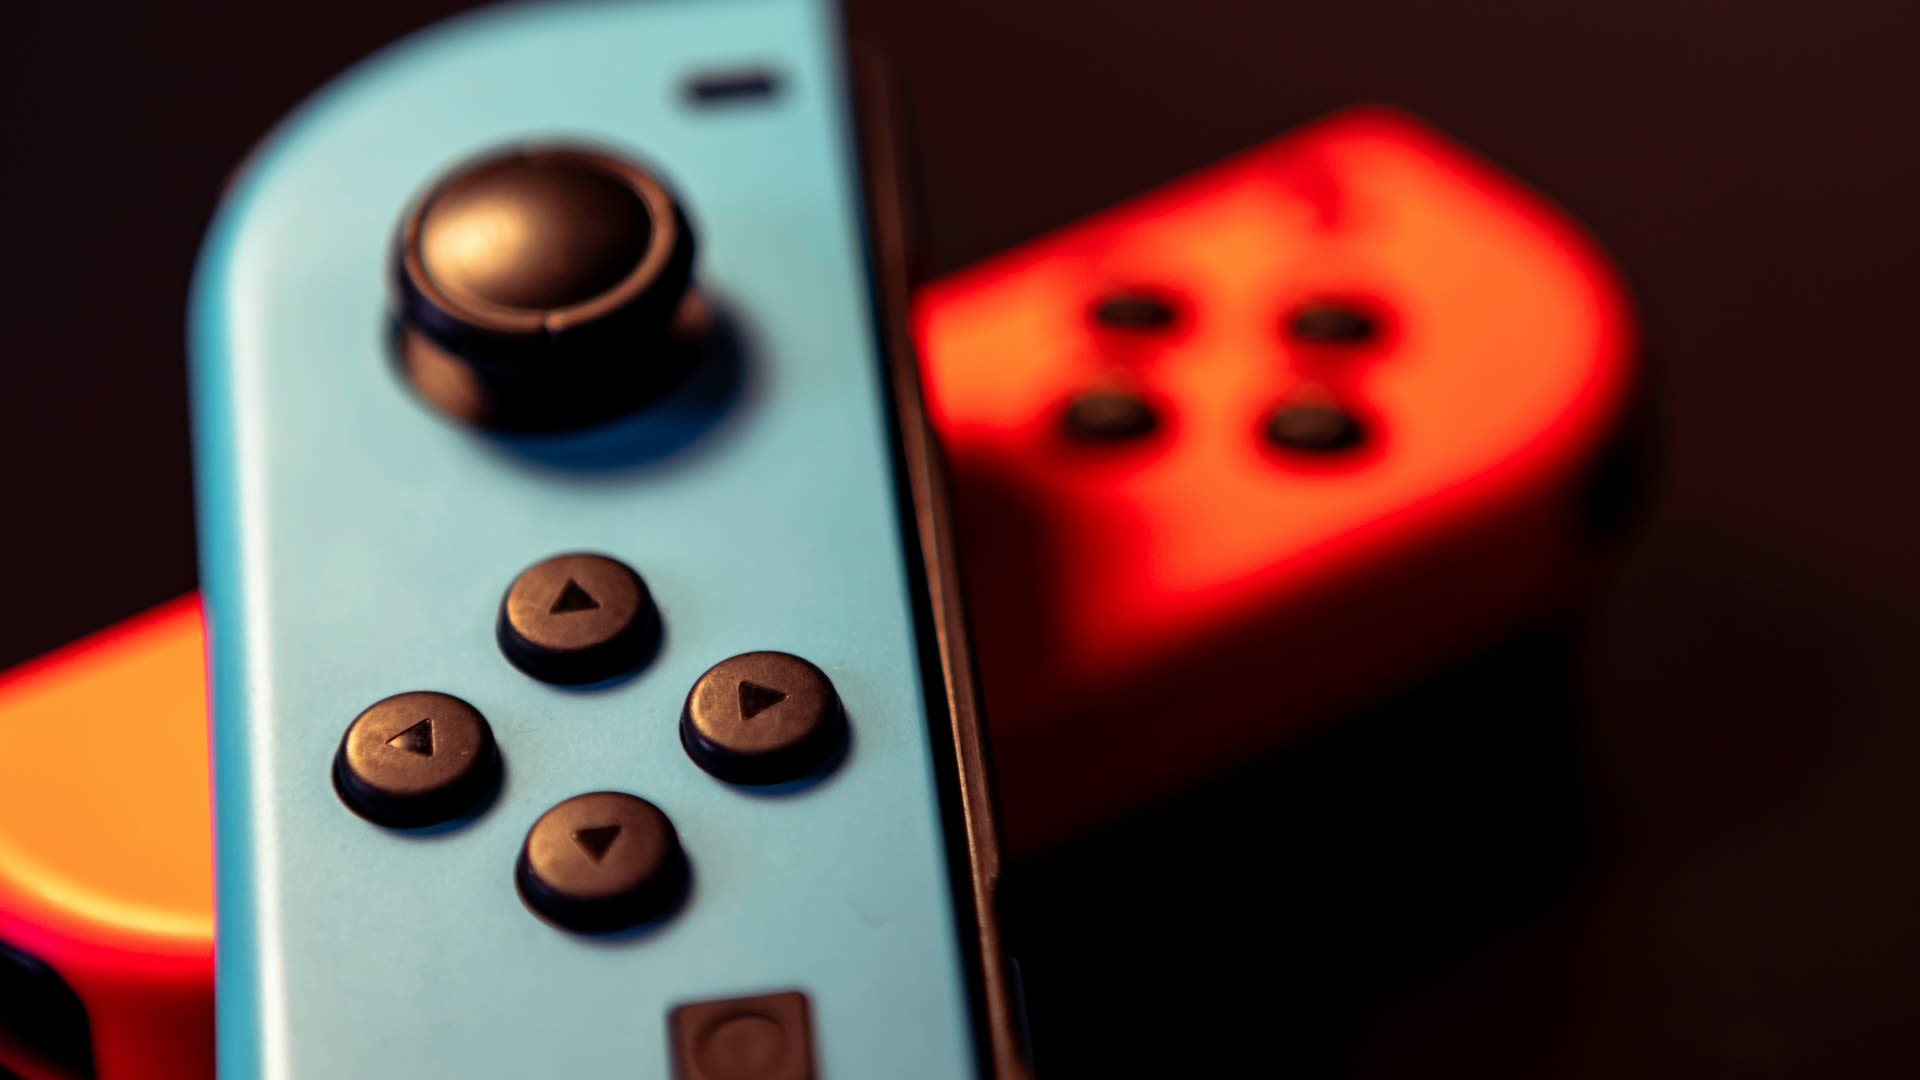 Parents Nintendo Joy-Con drift lawsuit will finally be dismissed